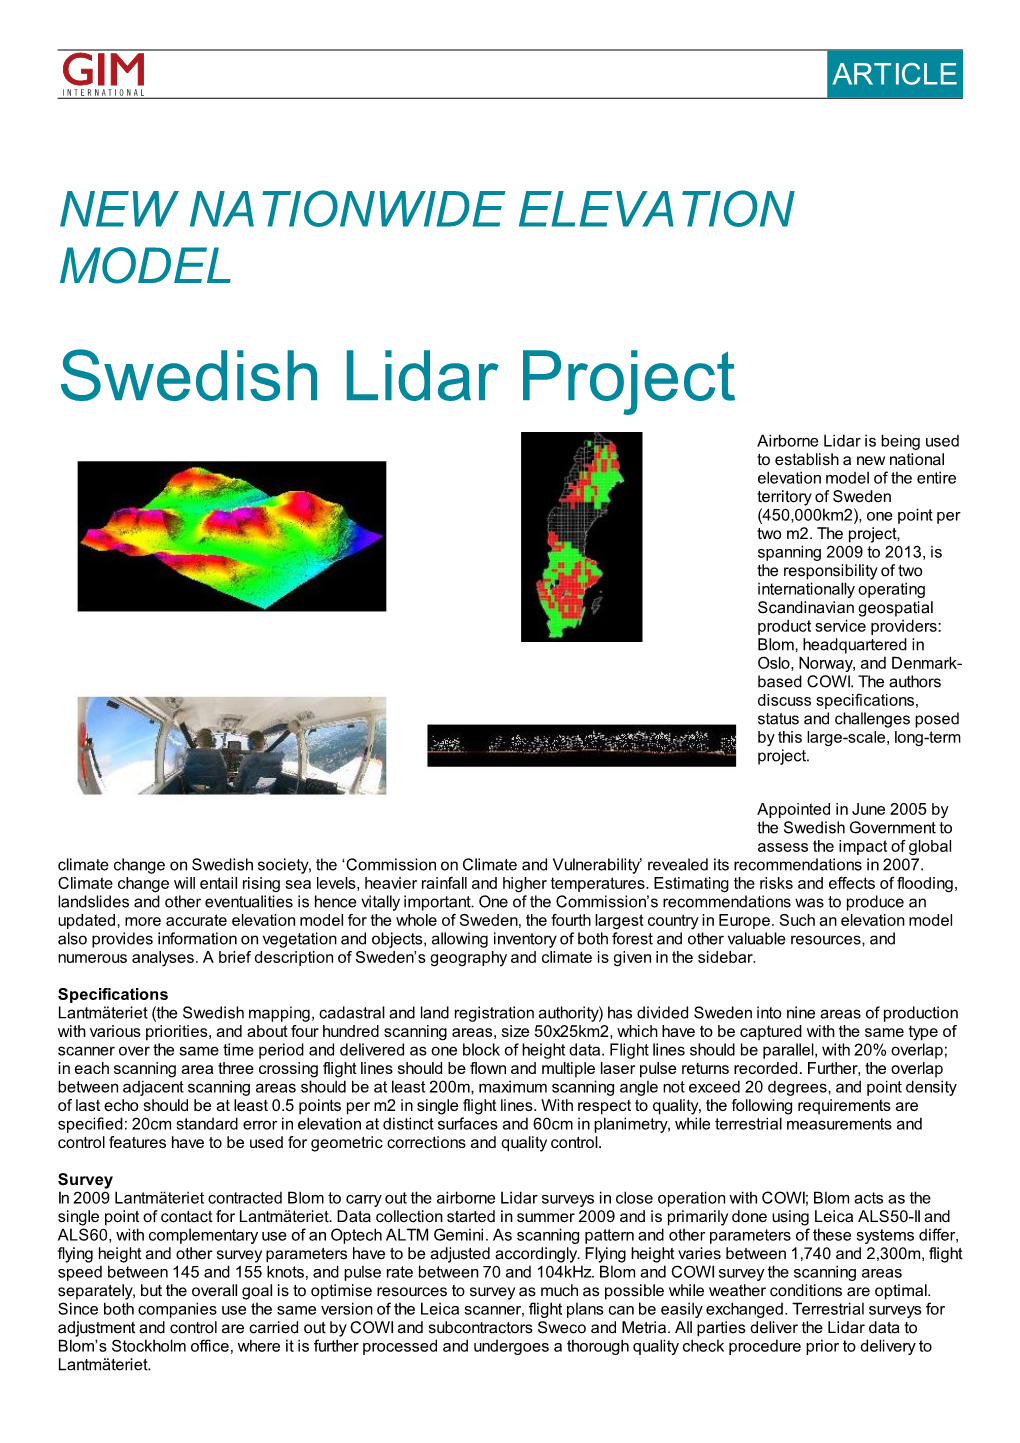 Swedish Lidar Project